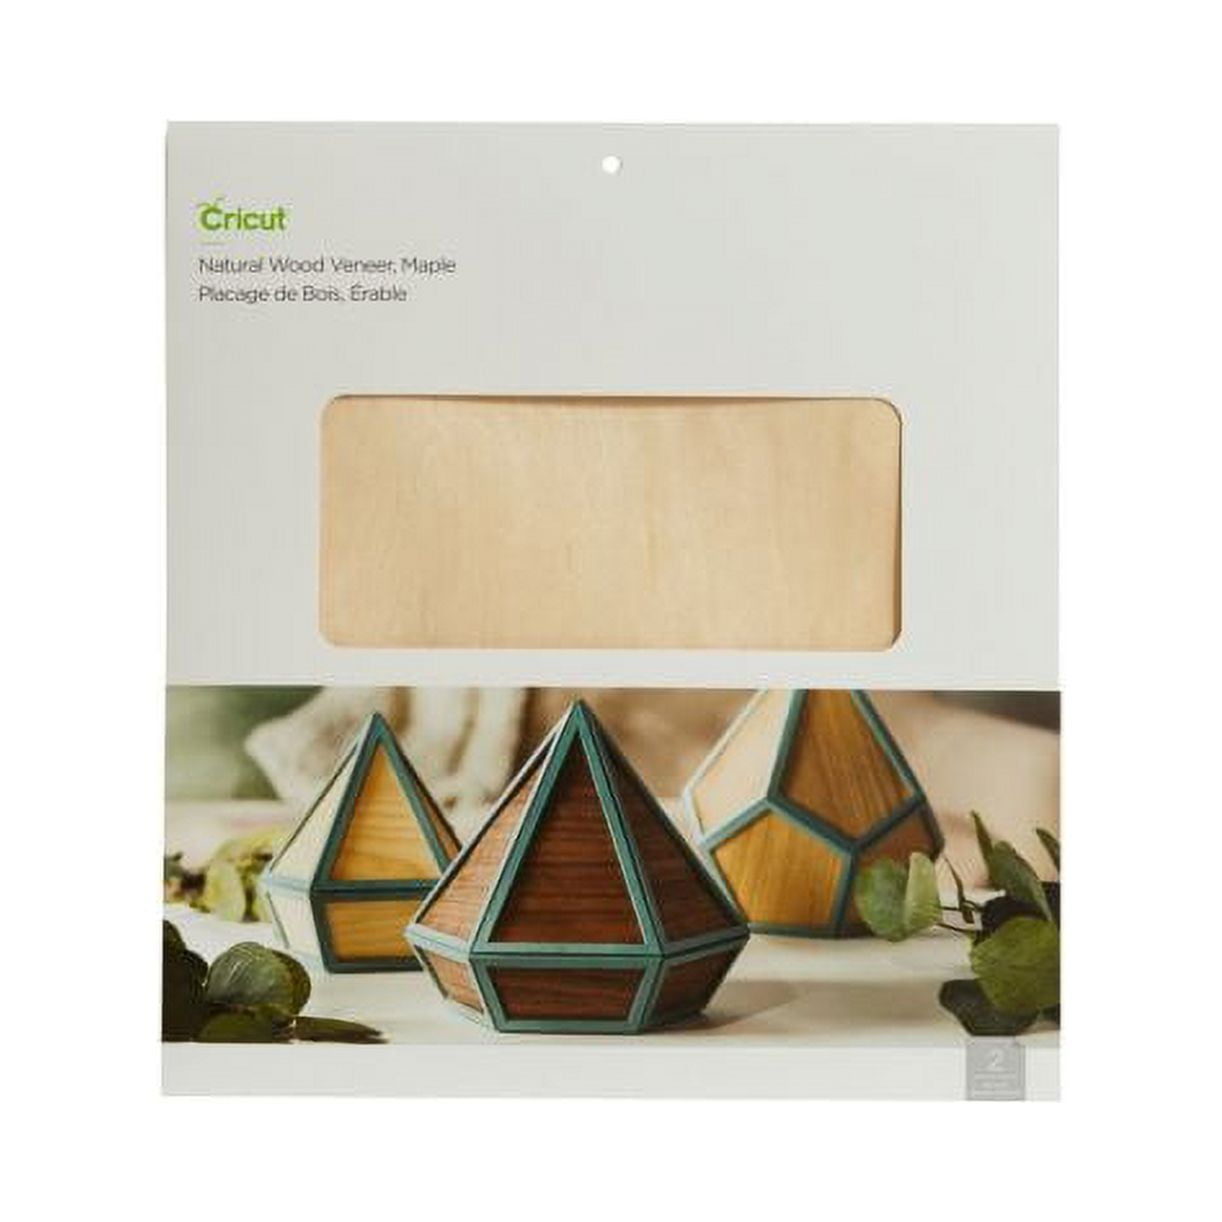 Can Cricut actually cut wood? : r/cricut